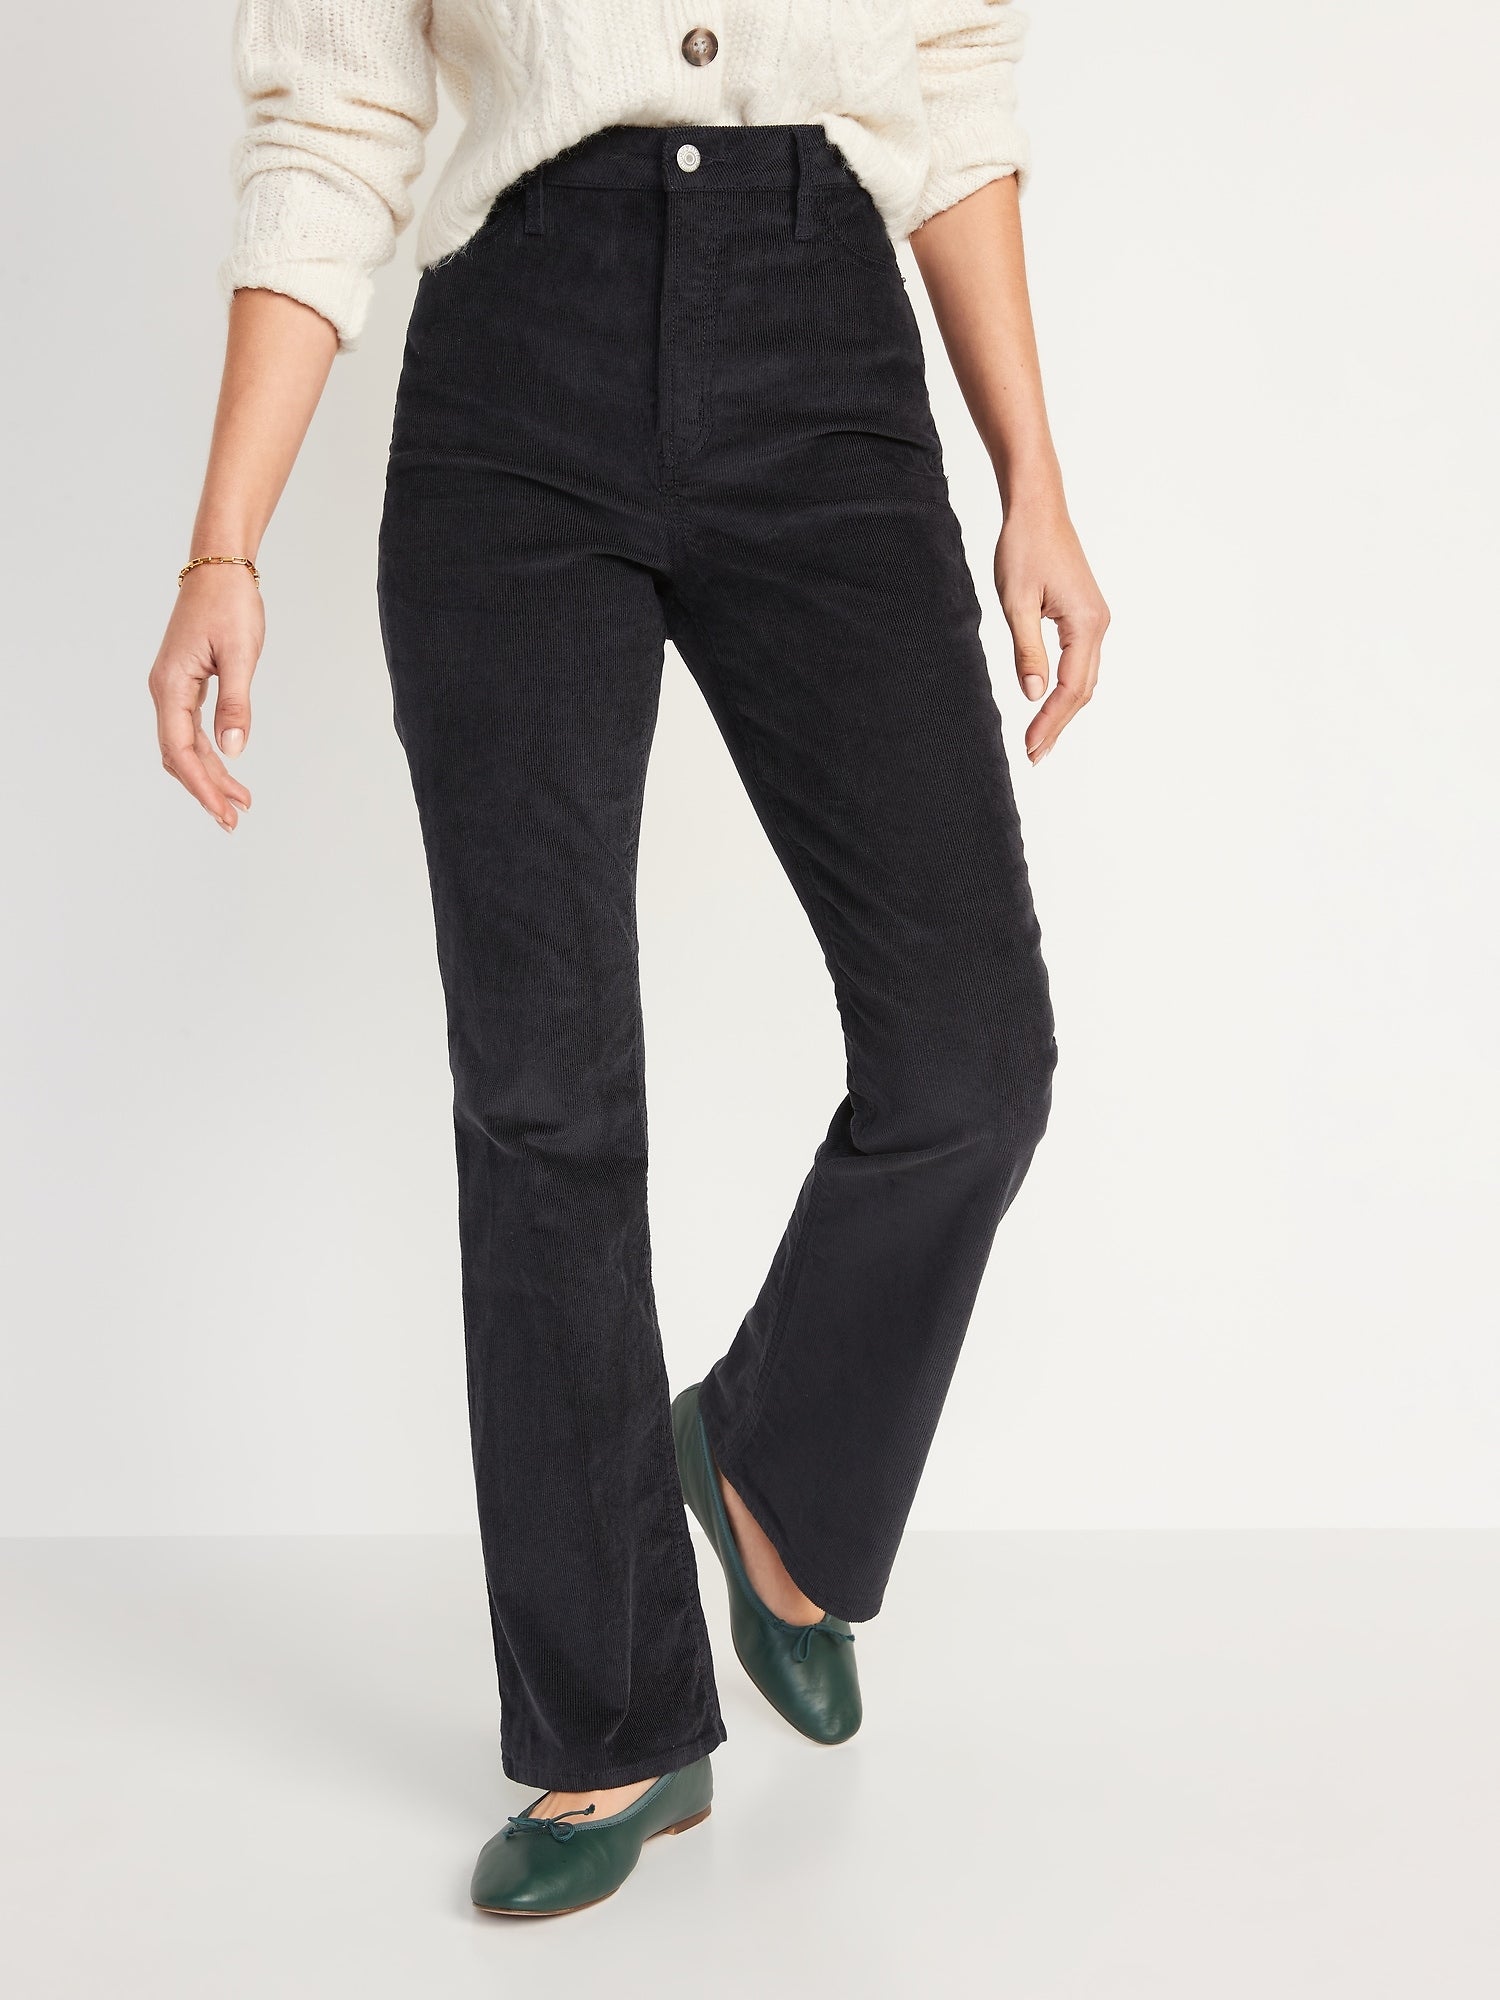 Higher High-Waisted Side-Slit Flare Jeans for Women